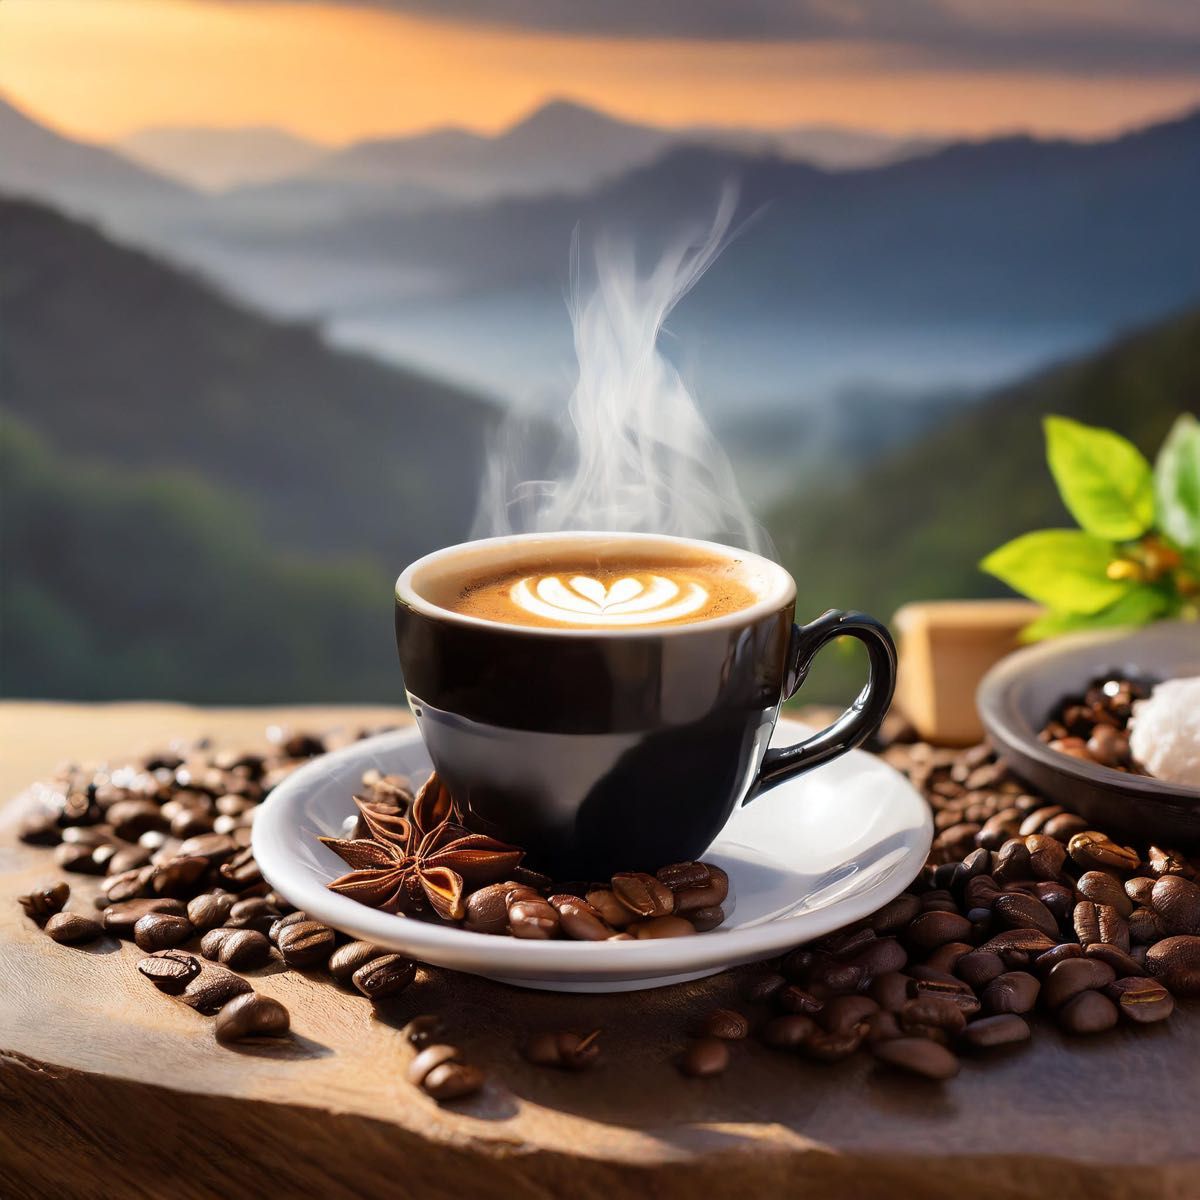 【YHR-COFFEE】至福の1杯 オリジナルブレンド ドリップコーヒー 10g 厳選素材 丁寧焙煎 深いコク 豊かな香り 